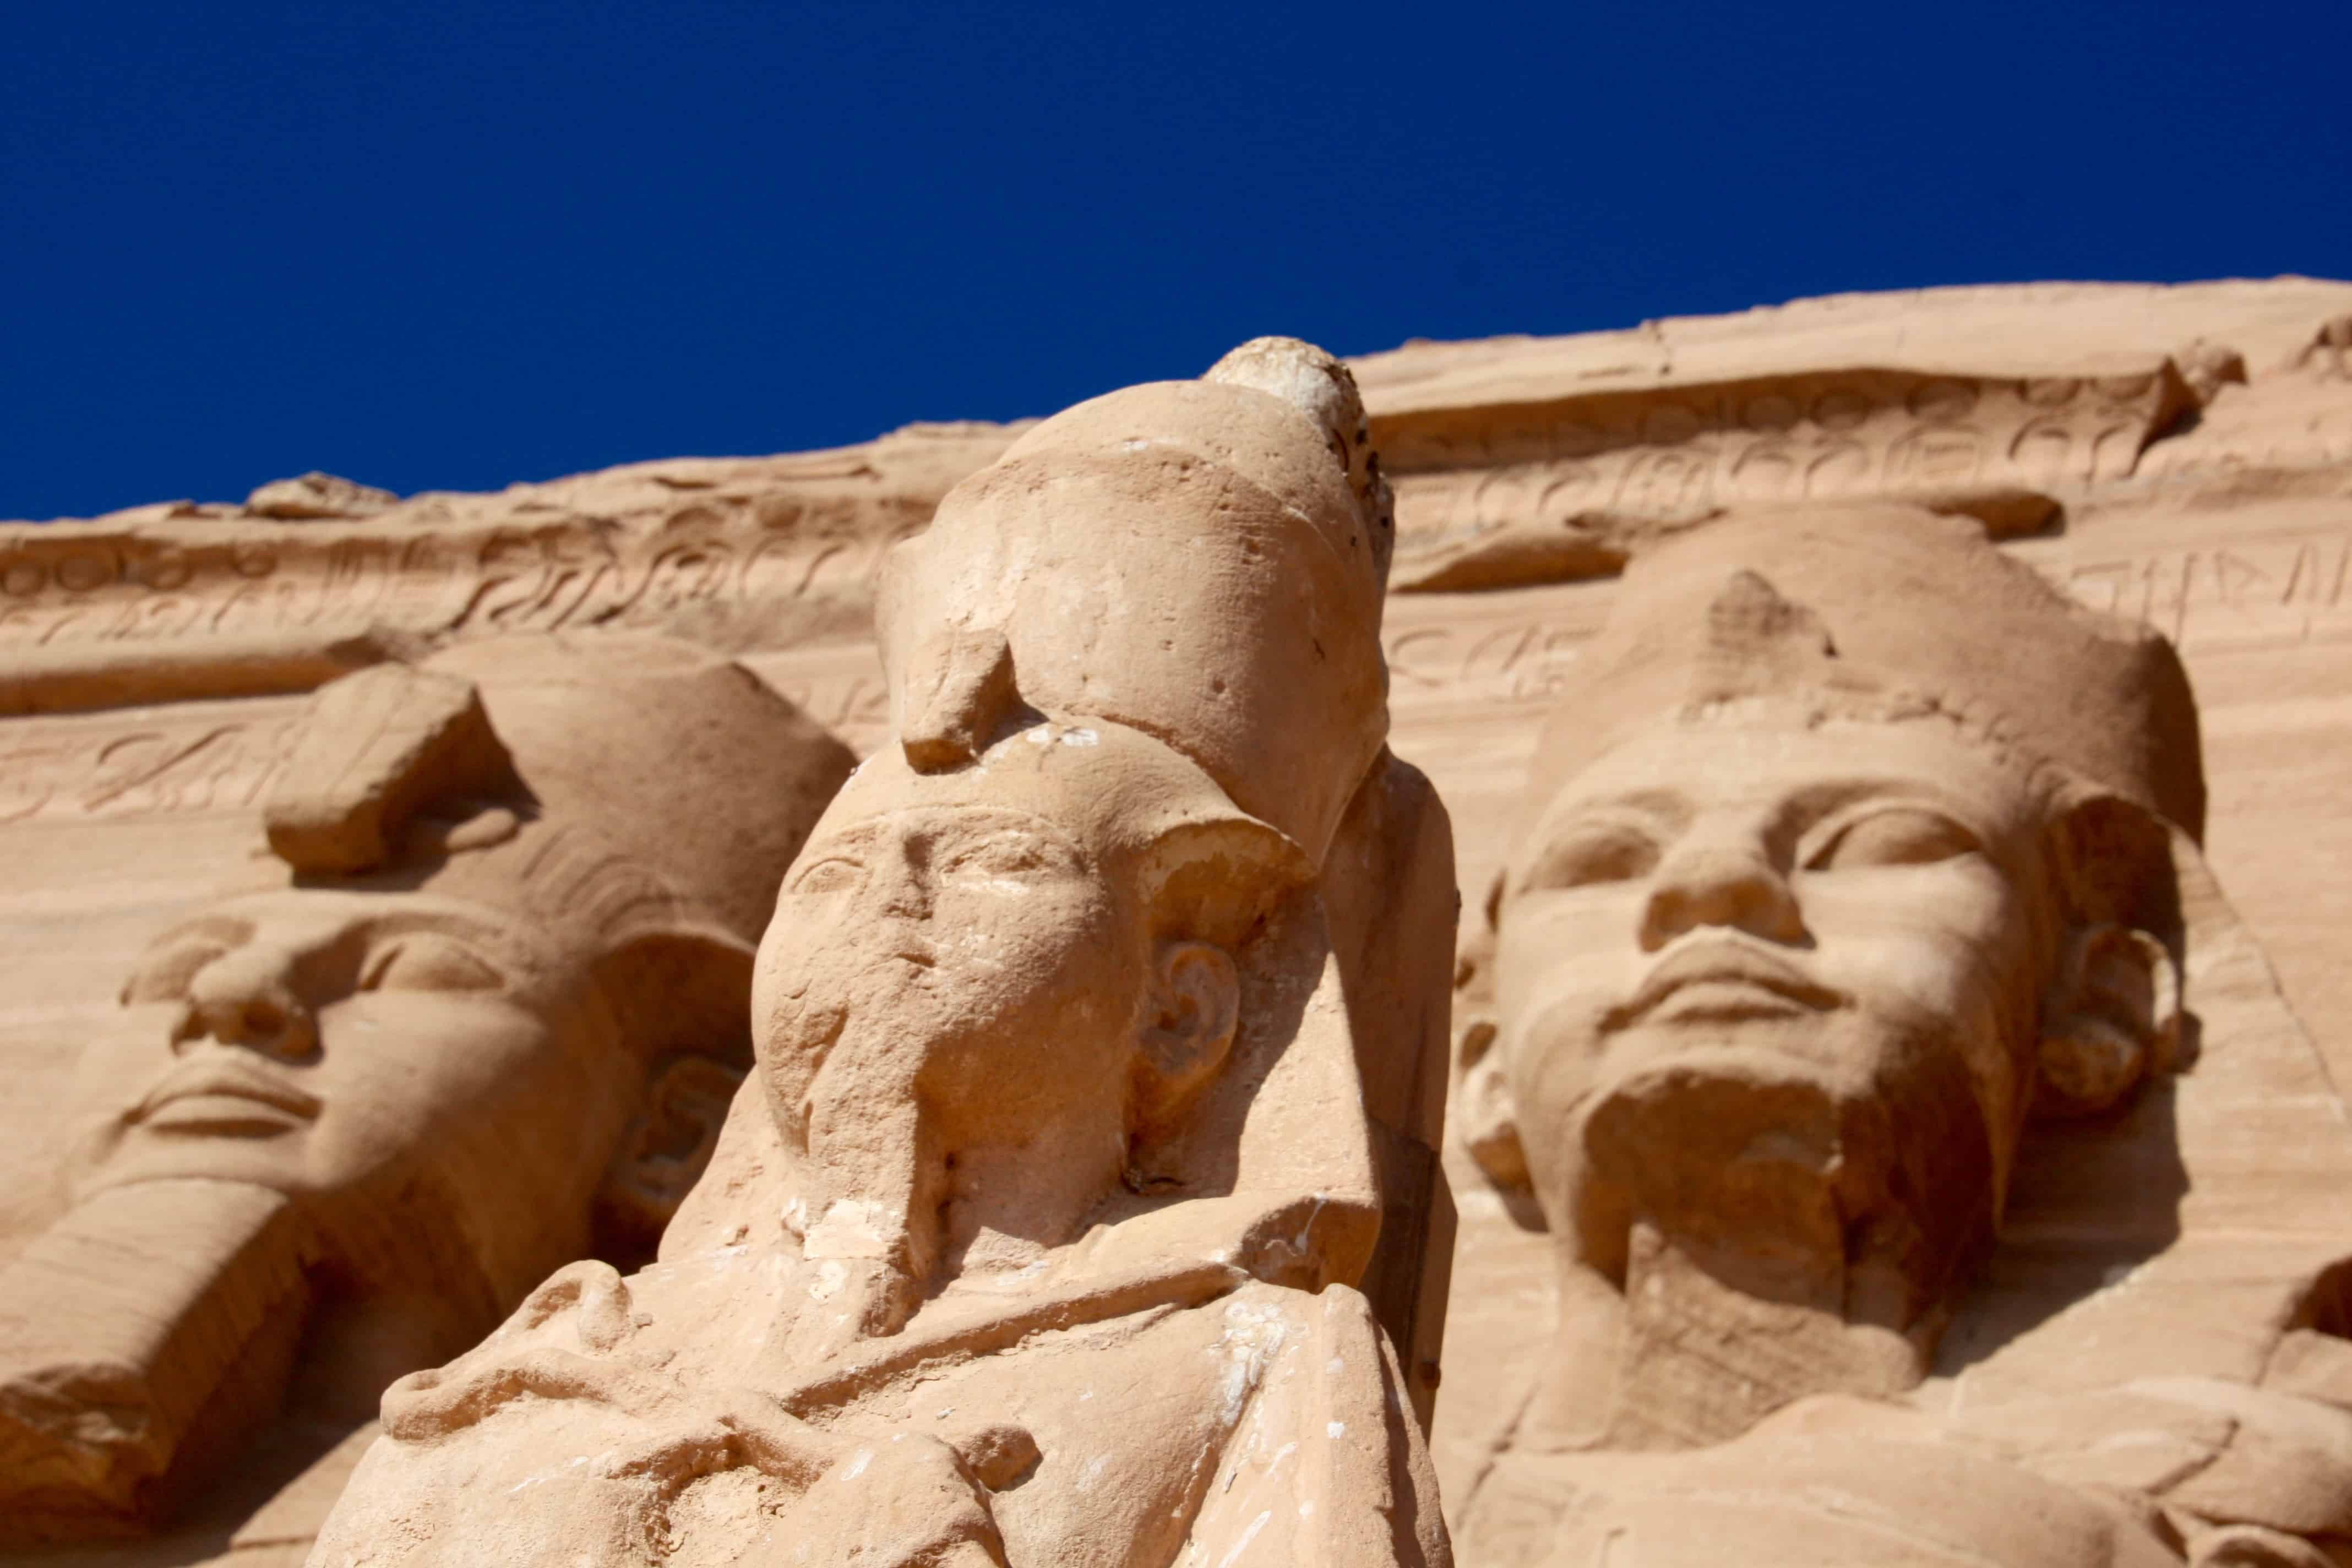 Giant statues of Ramses II and his wife Nefertari at Abu Simbel, Egypt